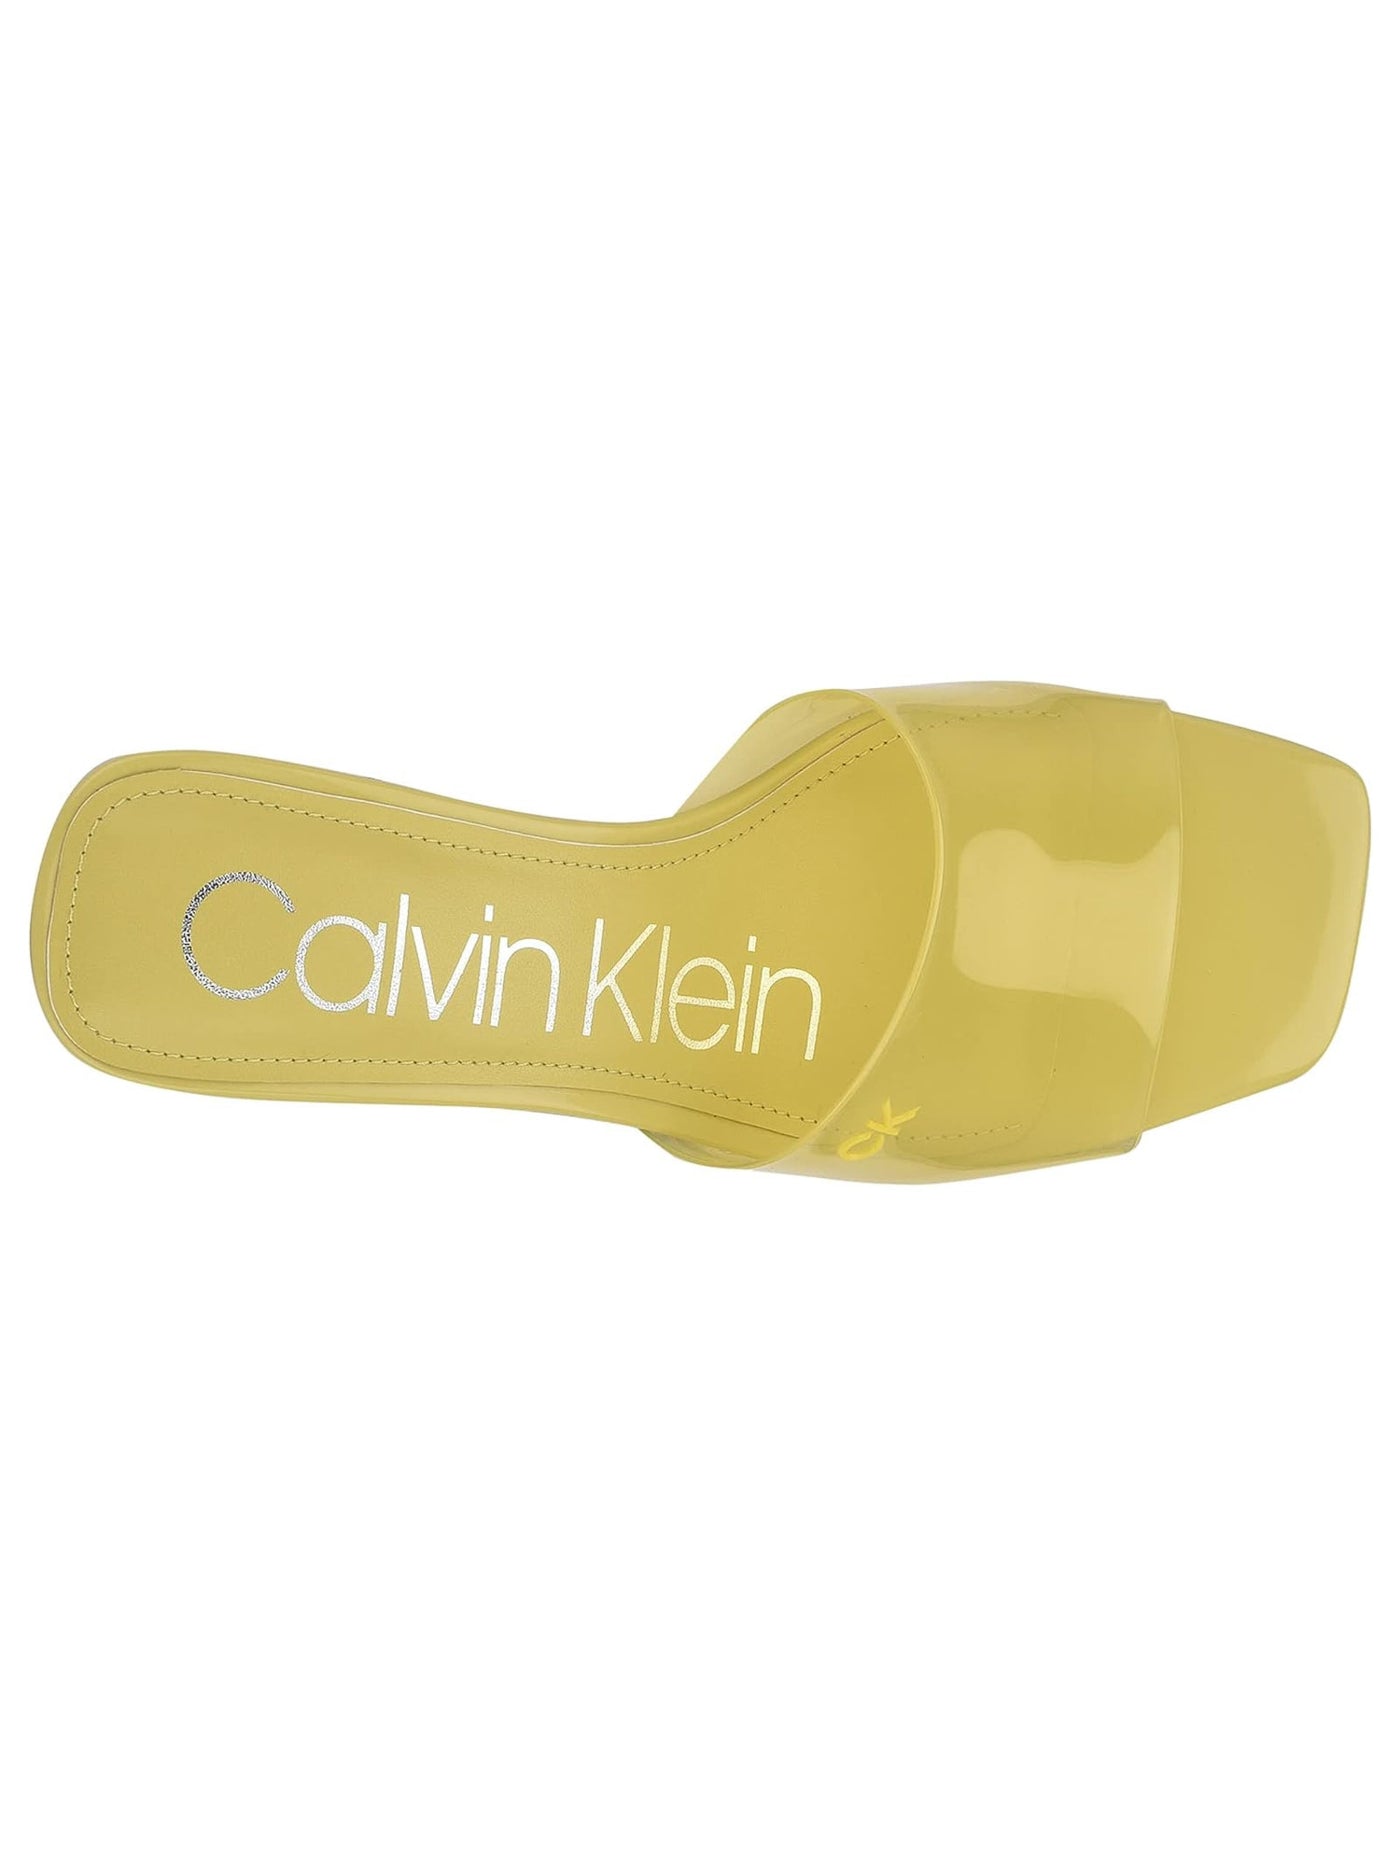 CALVIN KLEIN Womens Yellow Translucent Padded Graya Square Toe Kitten Heel Slip On Dress Heeled Sandal 7.5 M